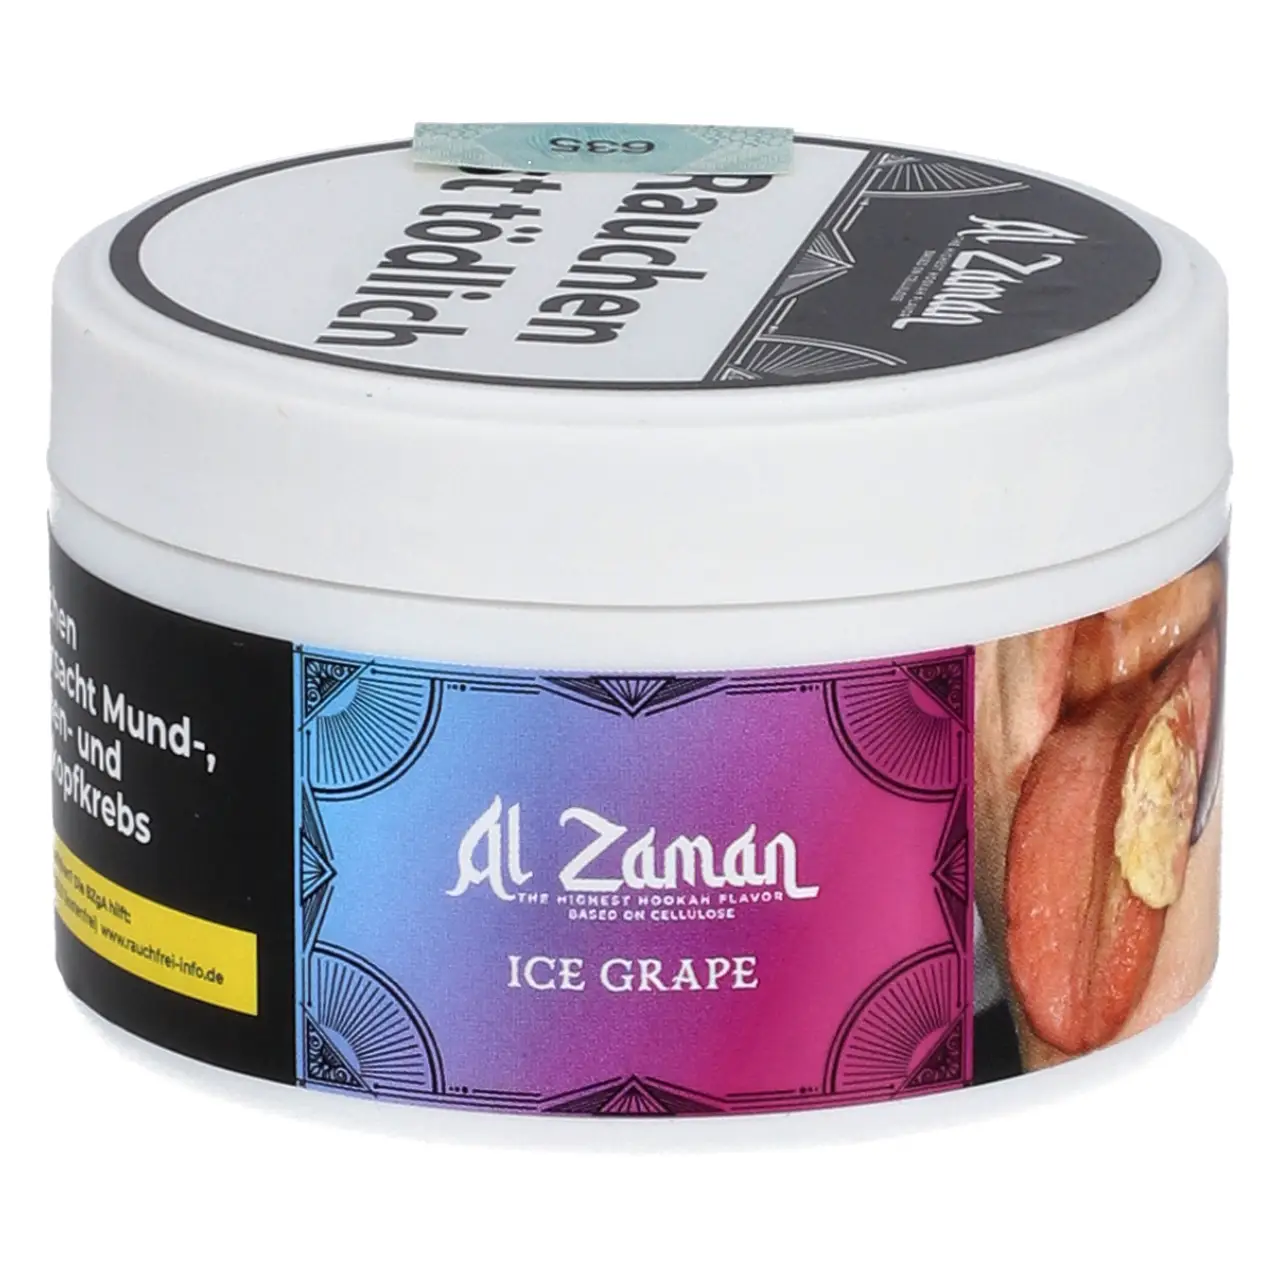 Al Zaman nikotinfreier Shisha Tabak Ice Grape - Traube Ice - 25g